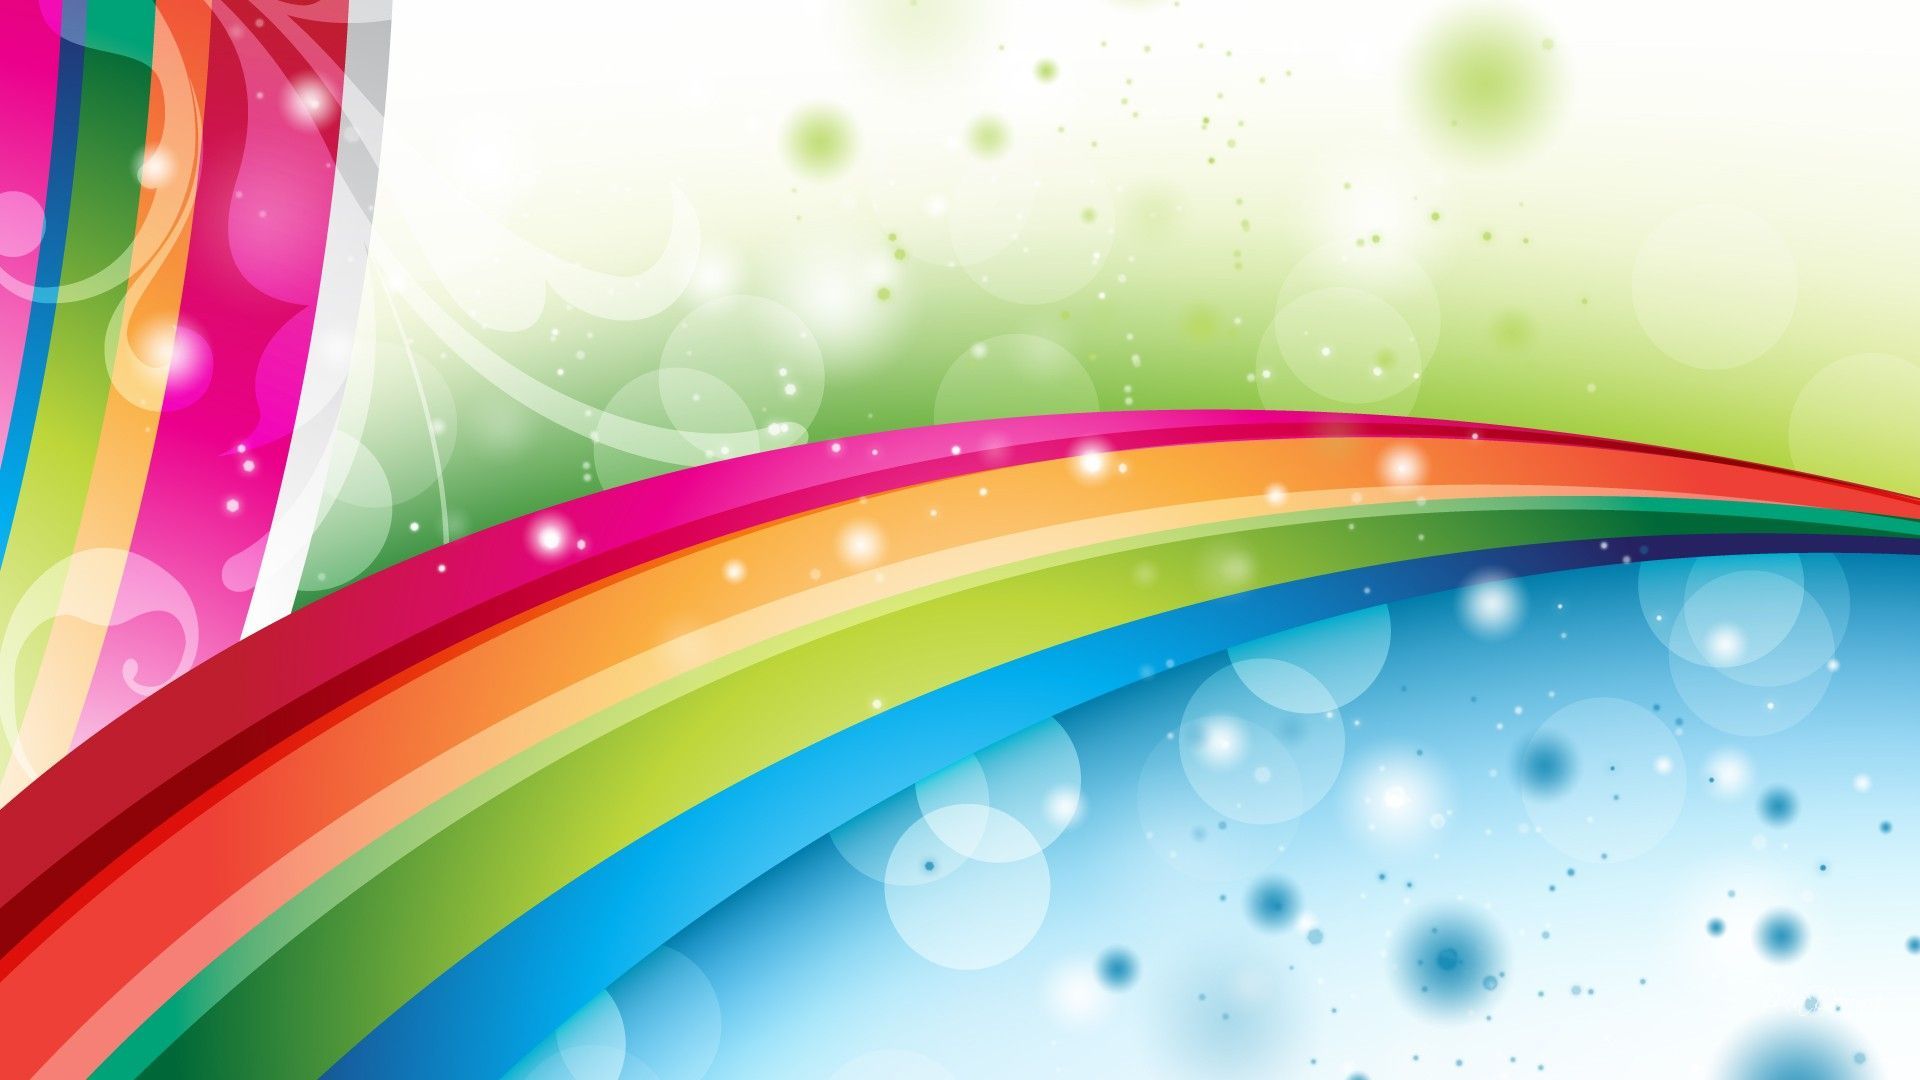 Abstract Rainbow wallpaper HD. Rainbow wallpaper, Rainbow wallpaper background, Rainbow abstract